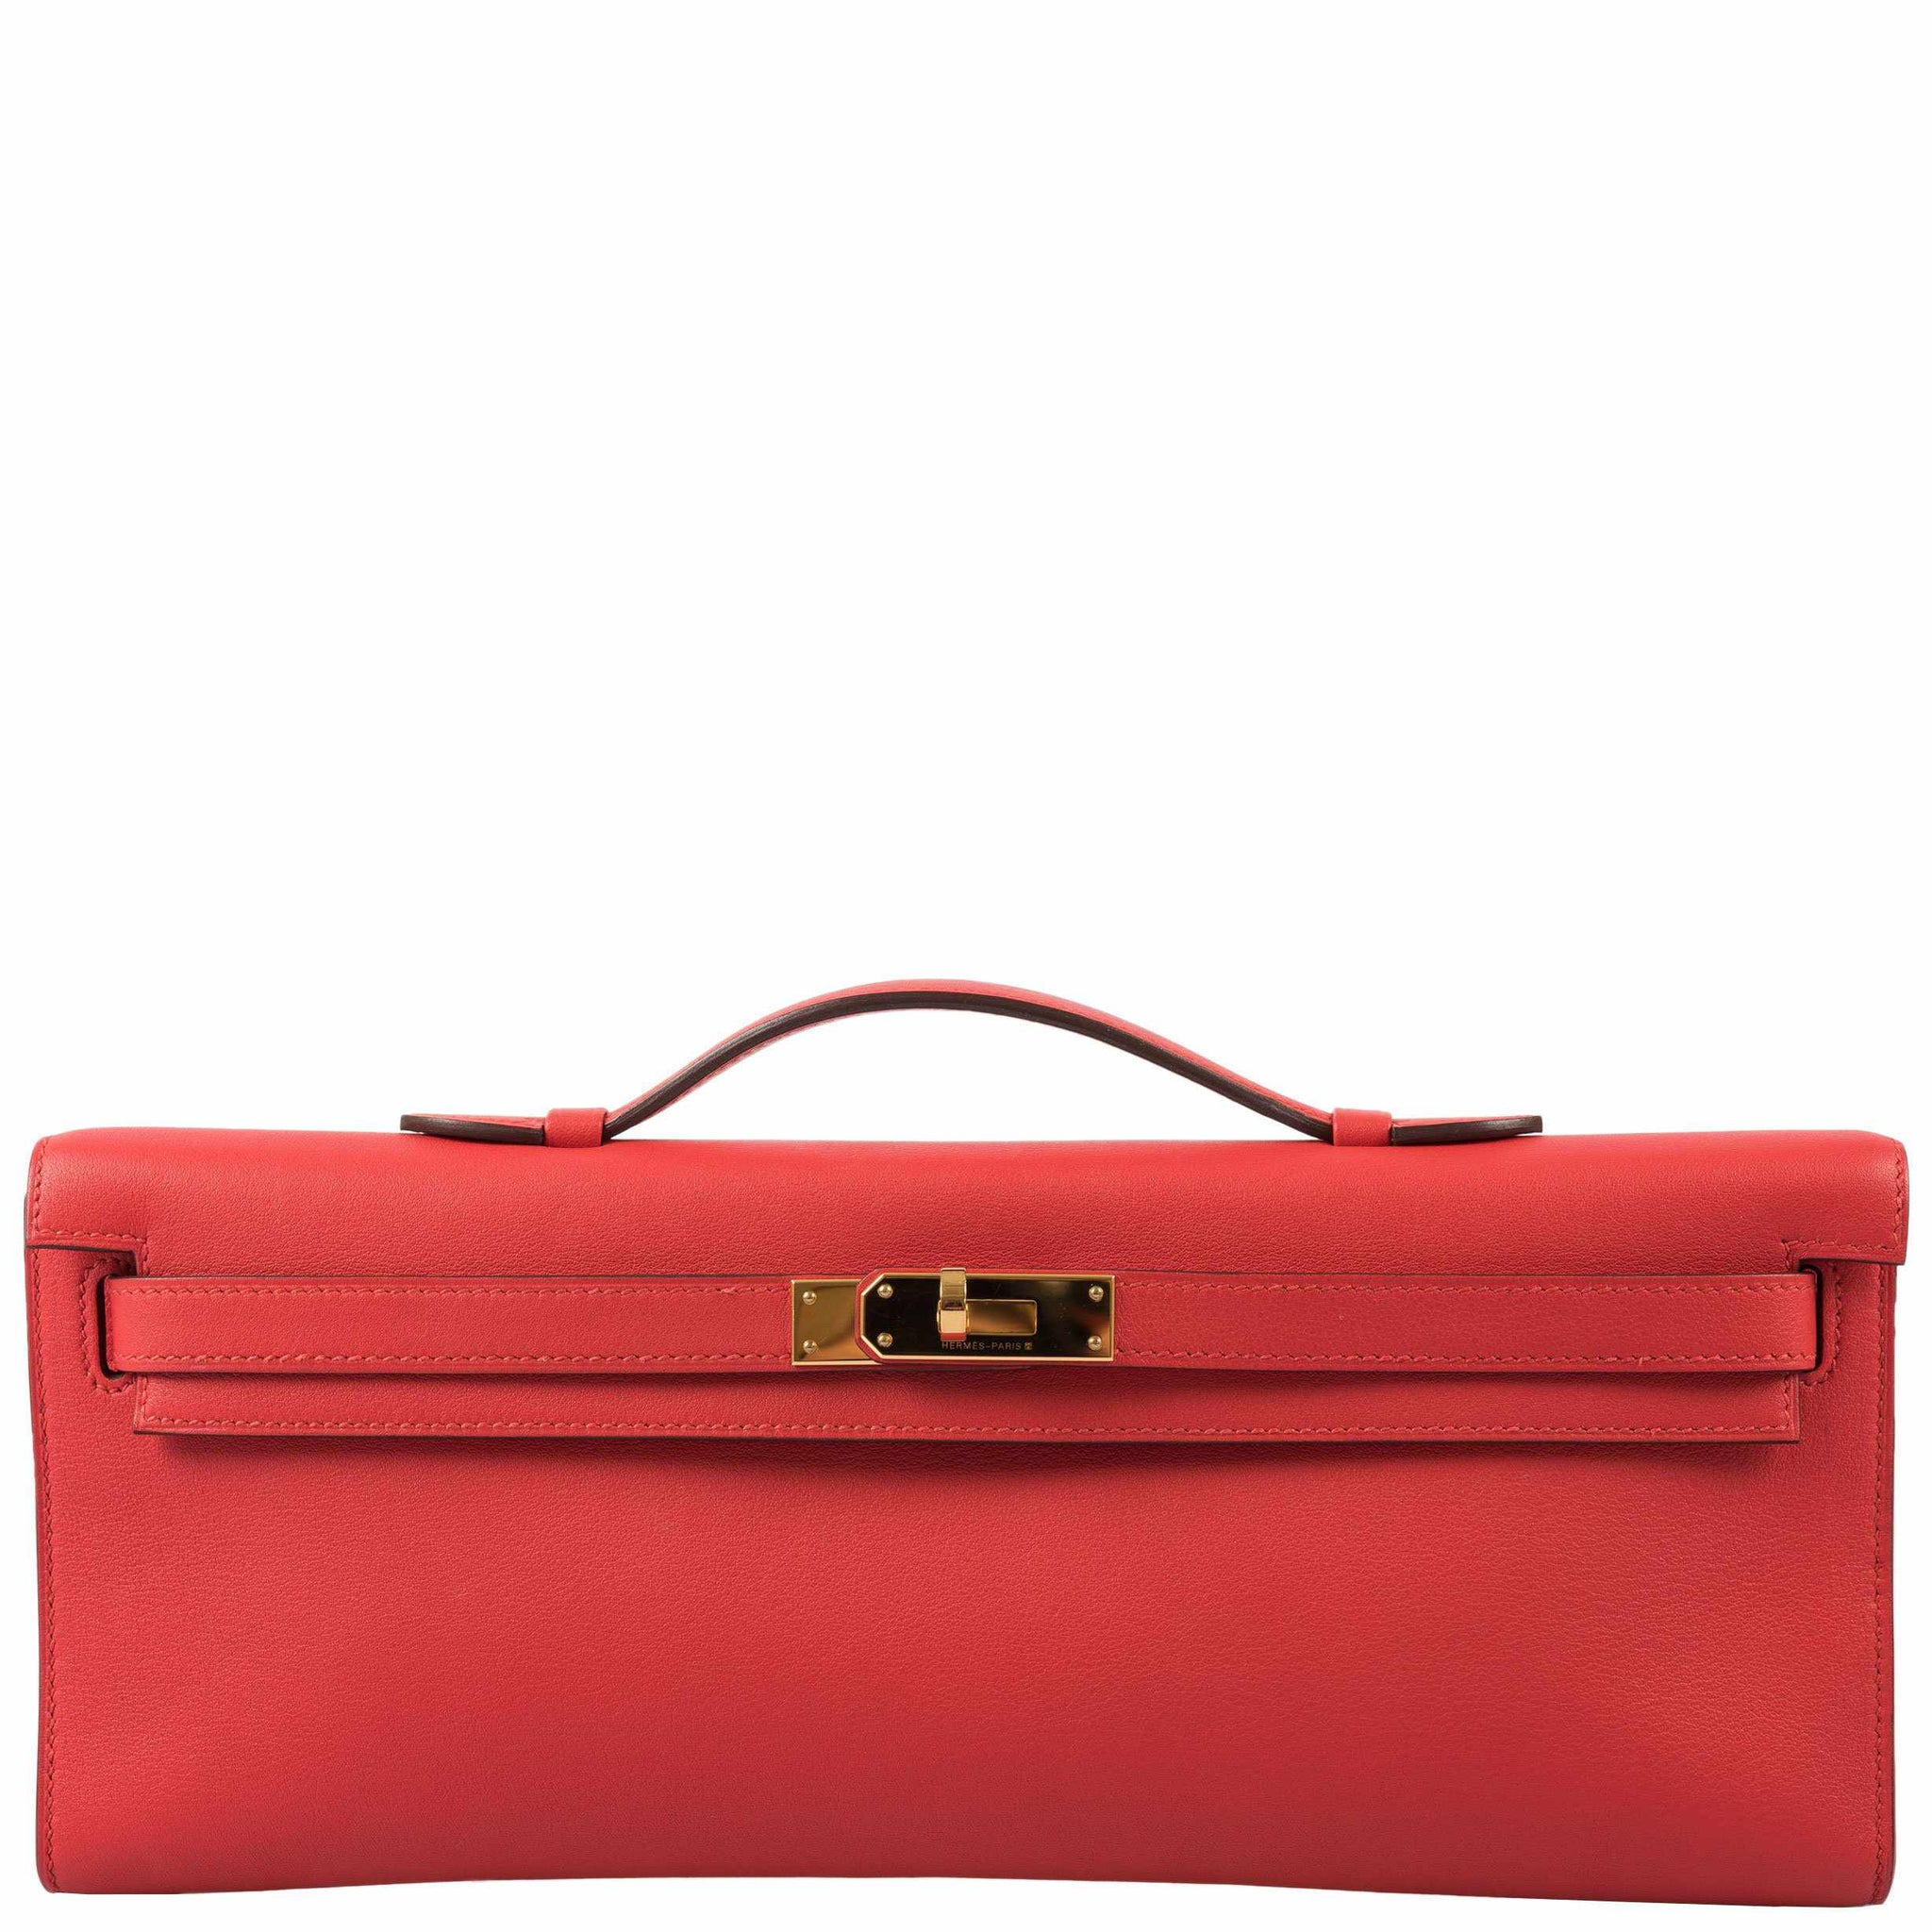 Hermes Kelly 25 Sellier Rouge Tomate Red Epsom Leather Bag Gold Hardware